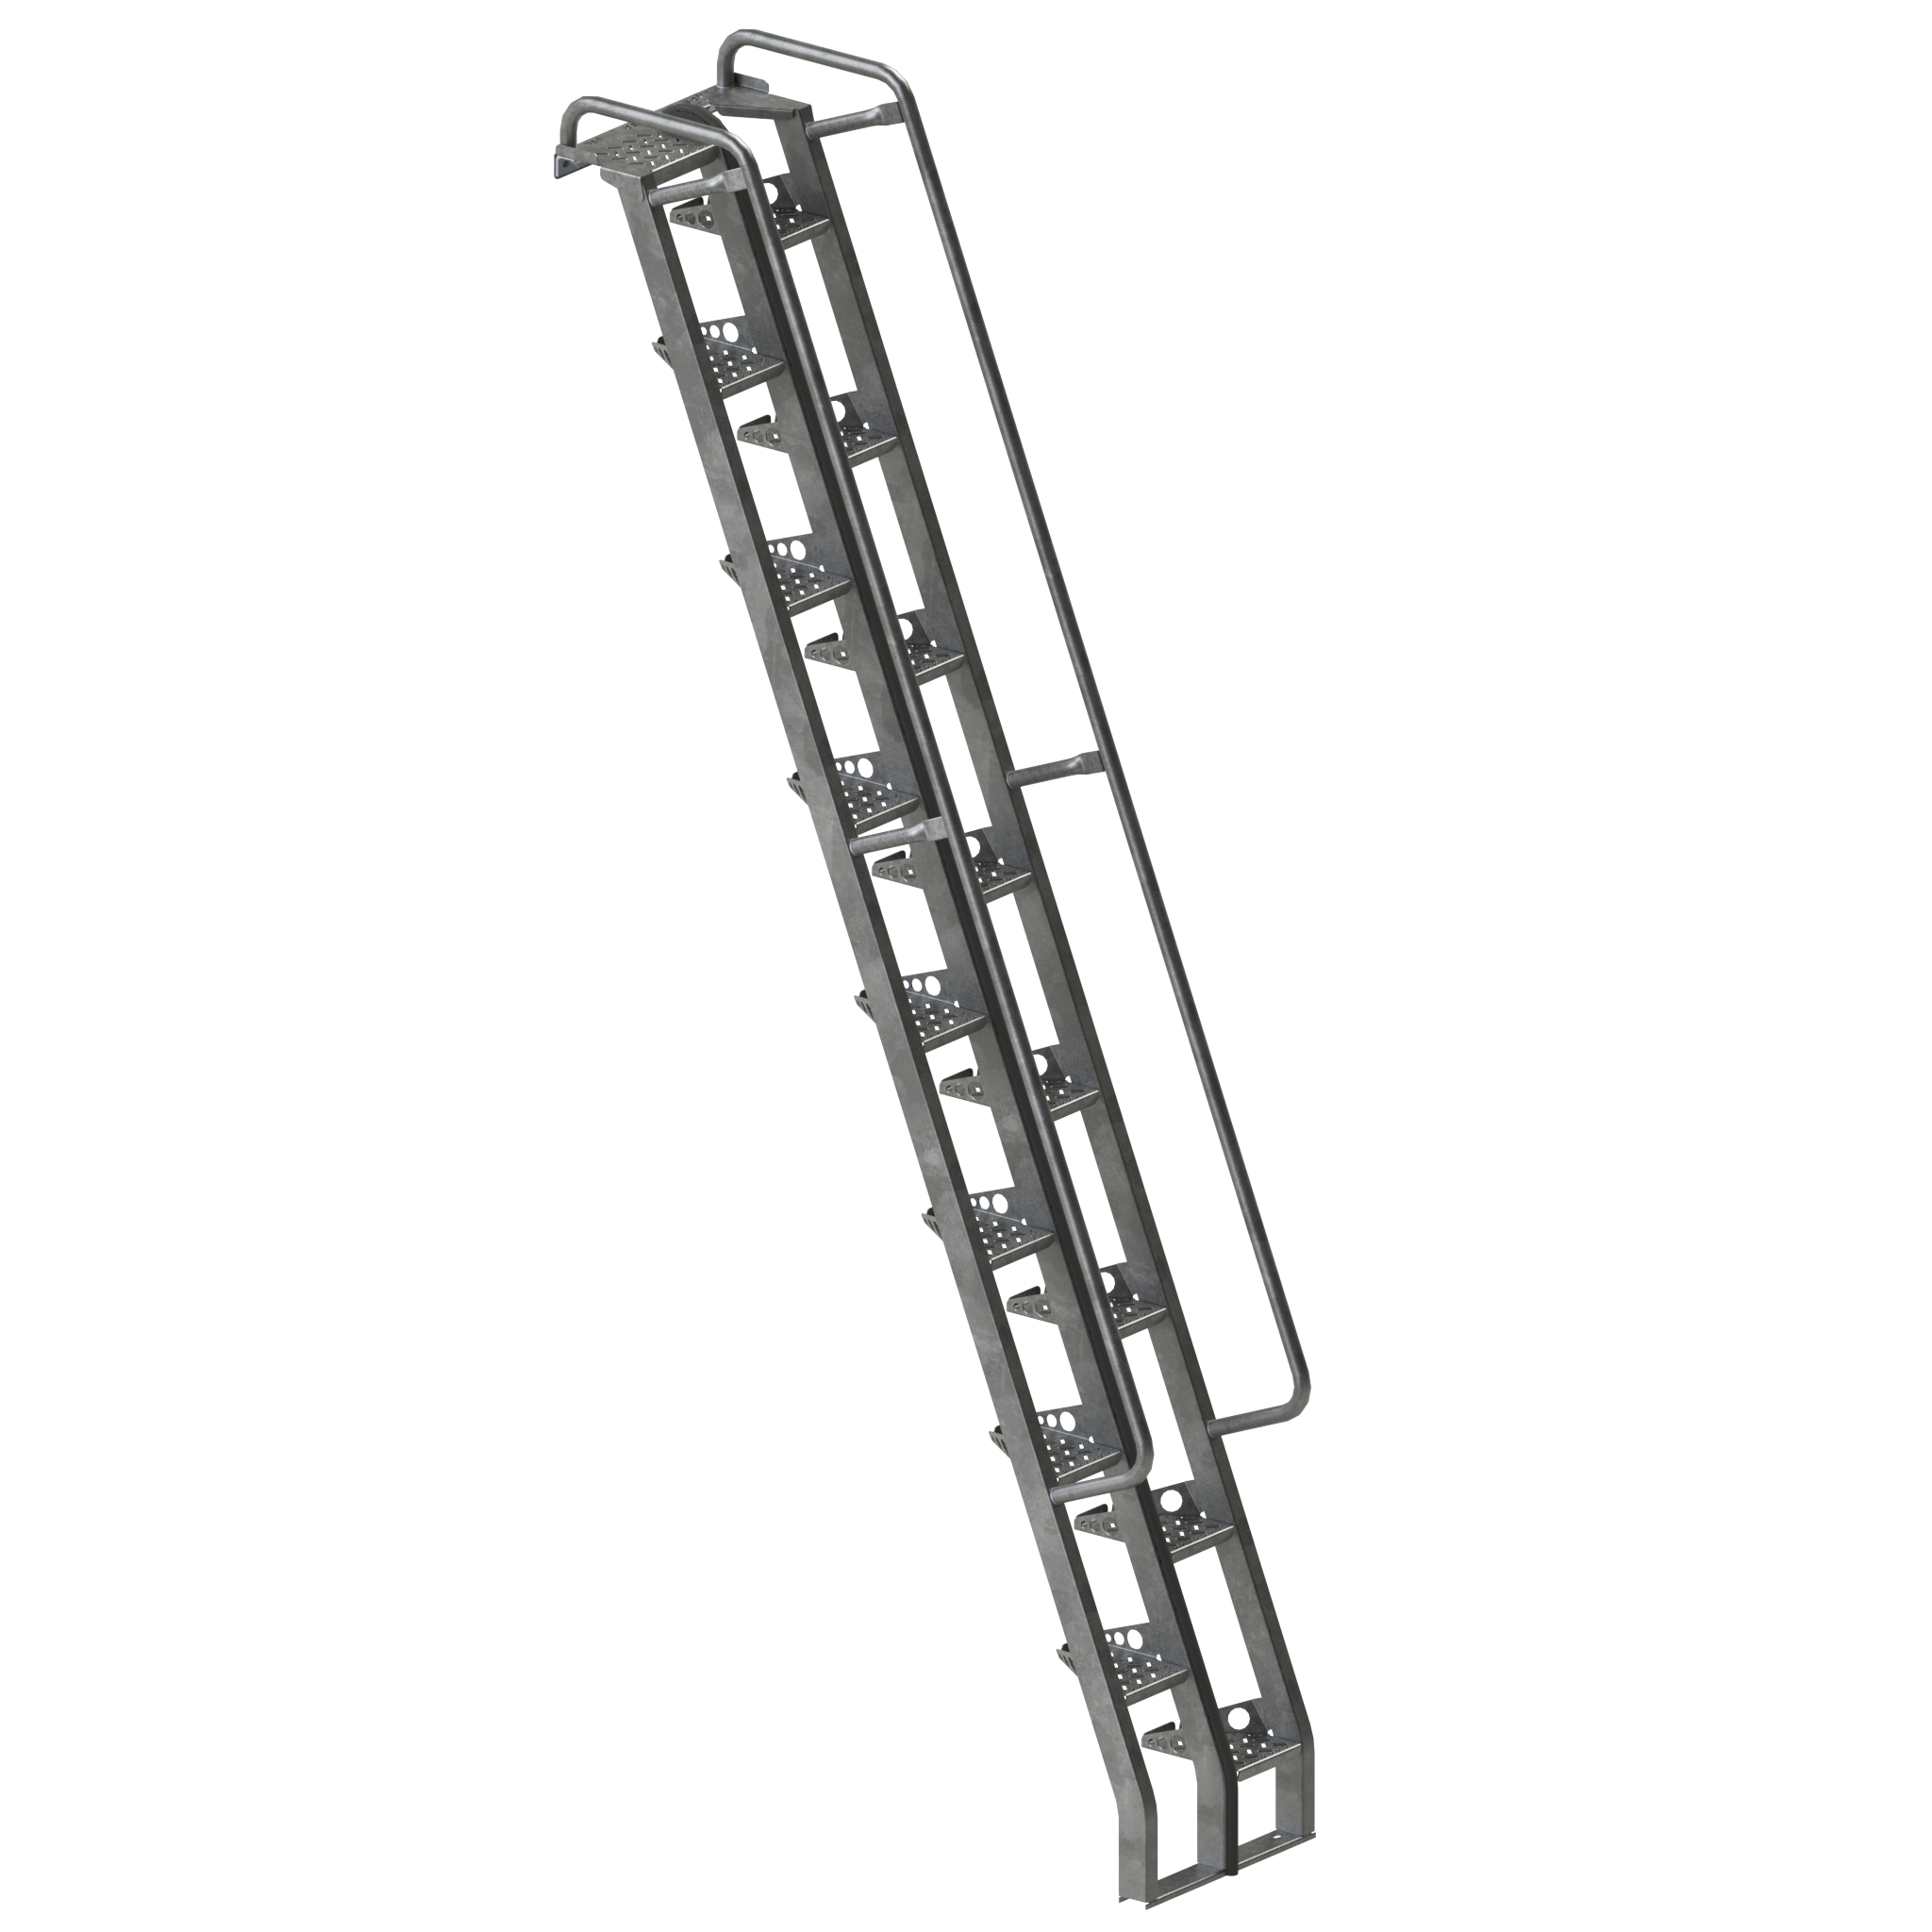 Alternating Tread Stair, Steel, Galvanized, 68 Degree, Optional Handrail